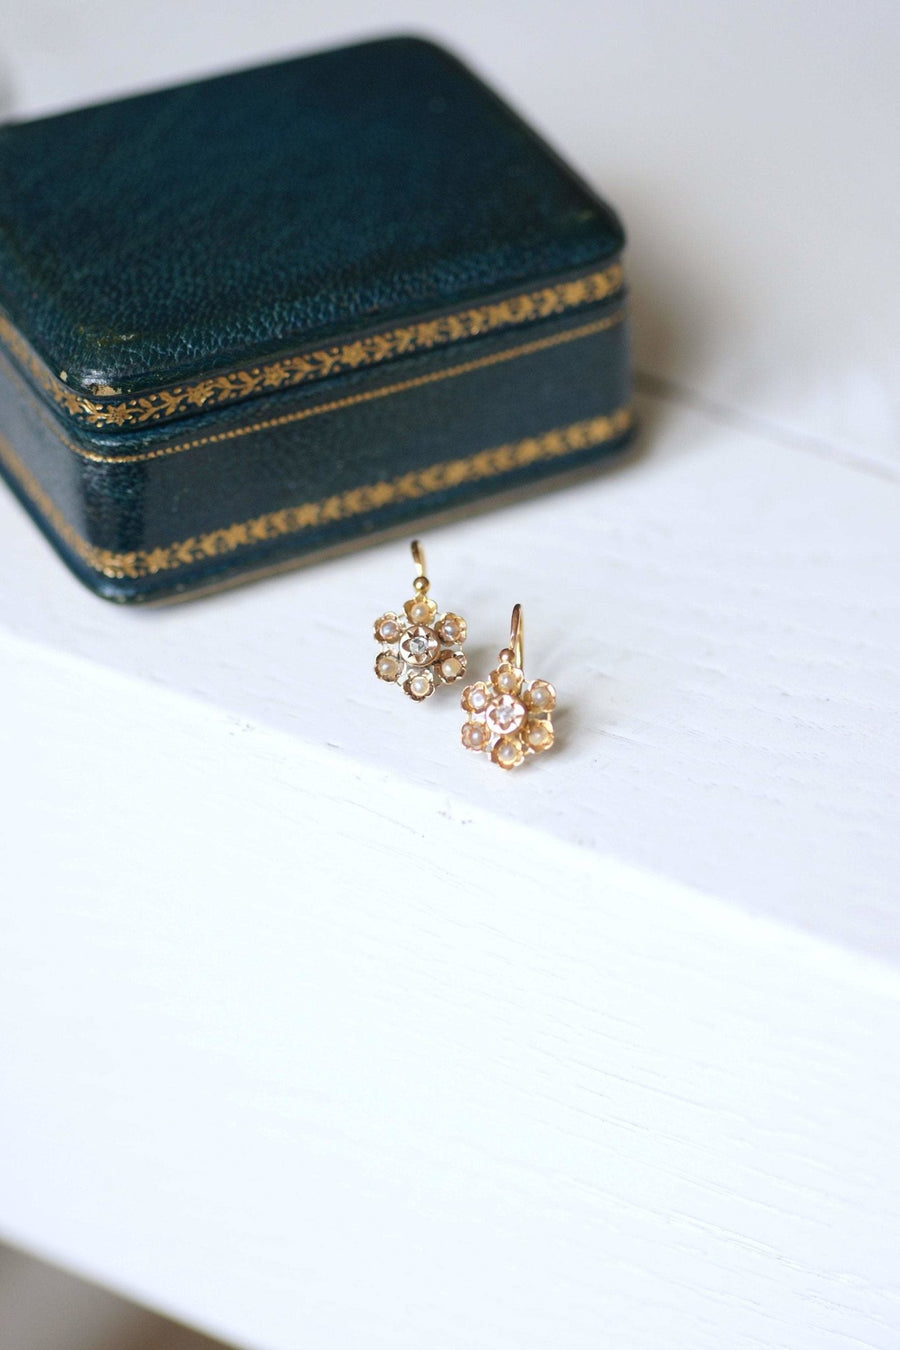 Antique flower, pearl and diamond earrings - Penelope Gallery